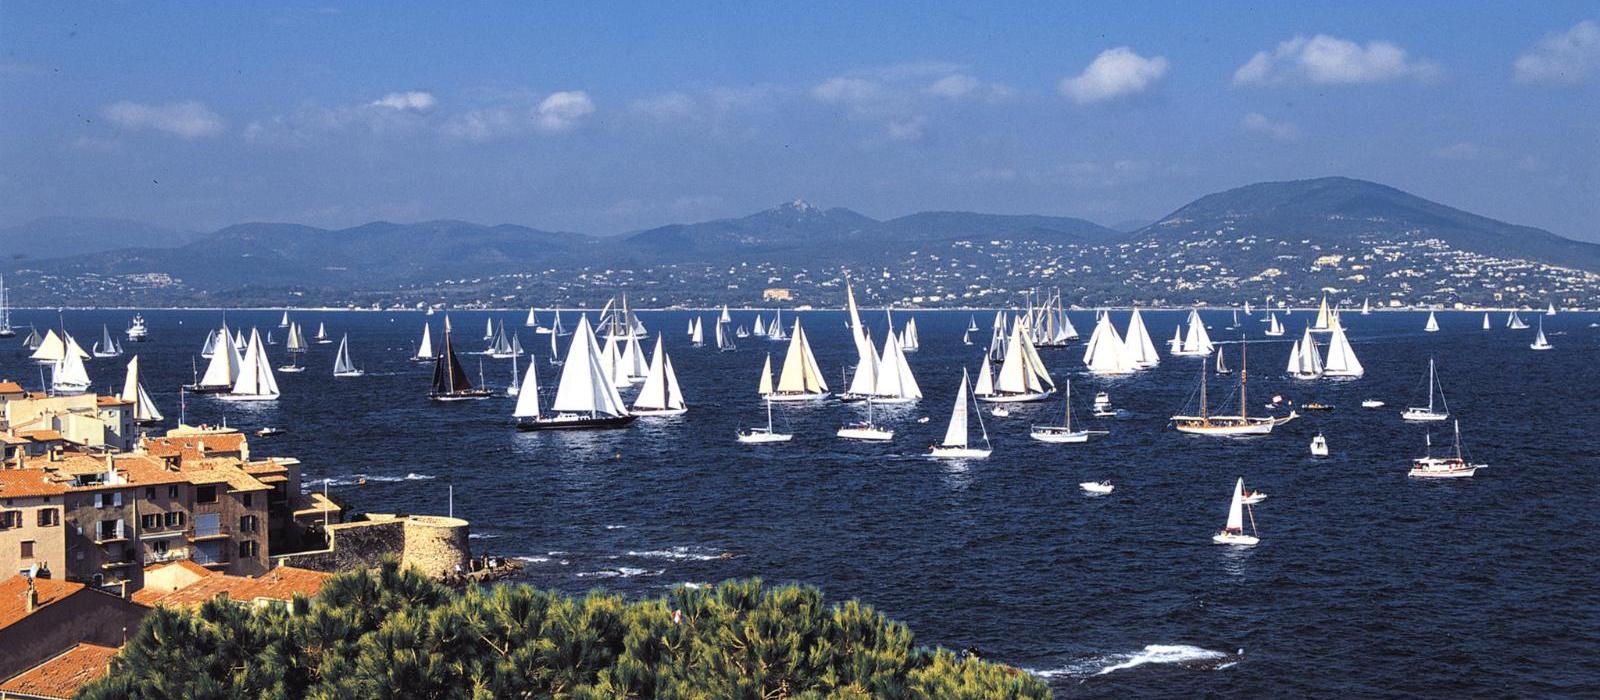 圣特罗佩碧珮乐思酒店(Hotel Byblos Saint-Tropez) 海滩帆船图片  www.lhw.cn